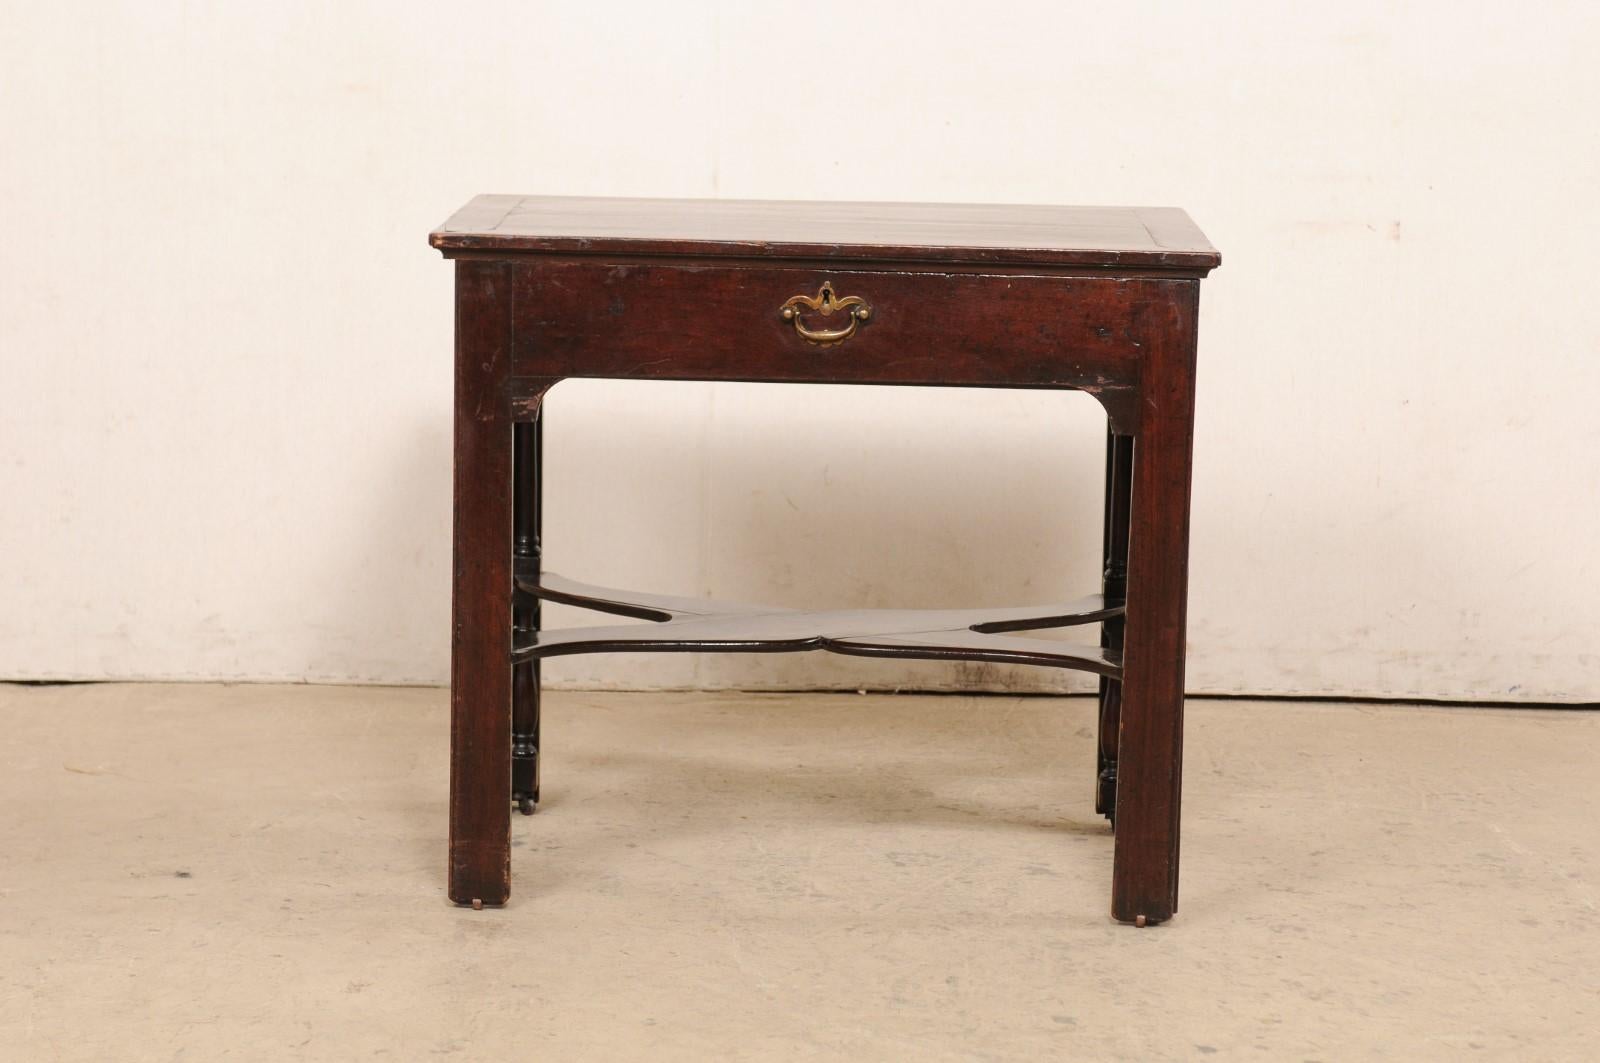 18th C. English Architect's Table w/Unique Legs, Expanding Top, & Candle Shelves For Sale 7